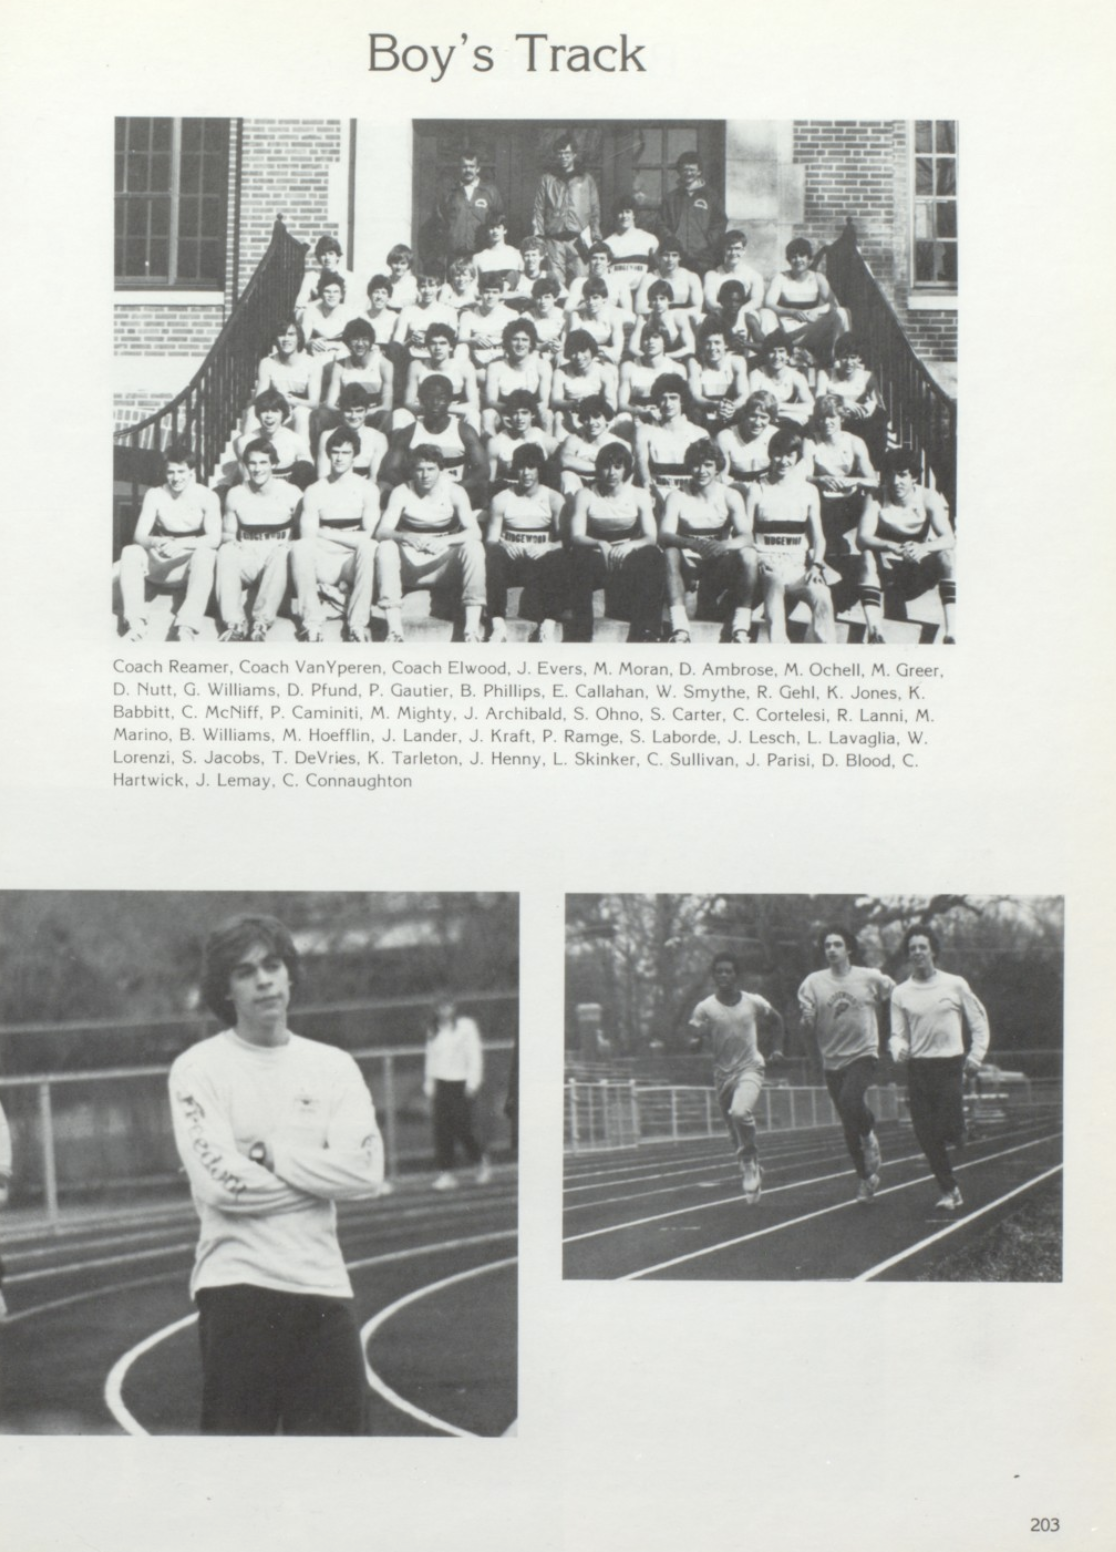 1983 Boys’ Track Team